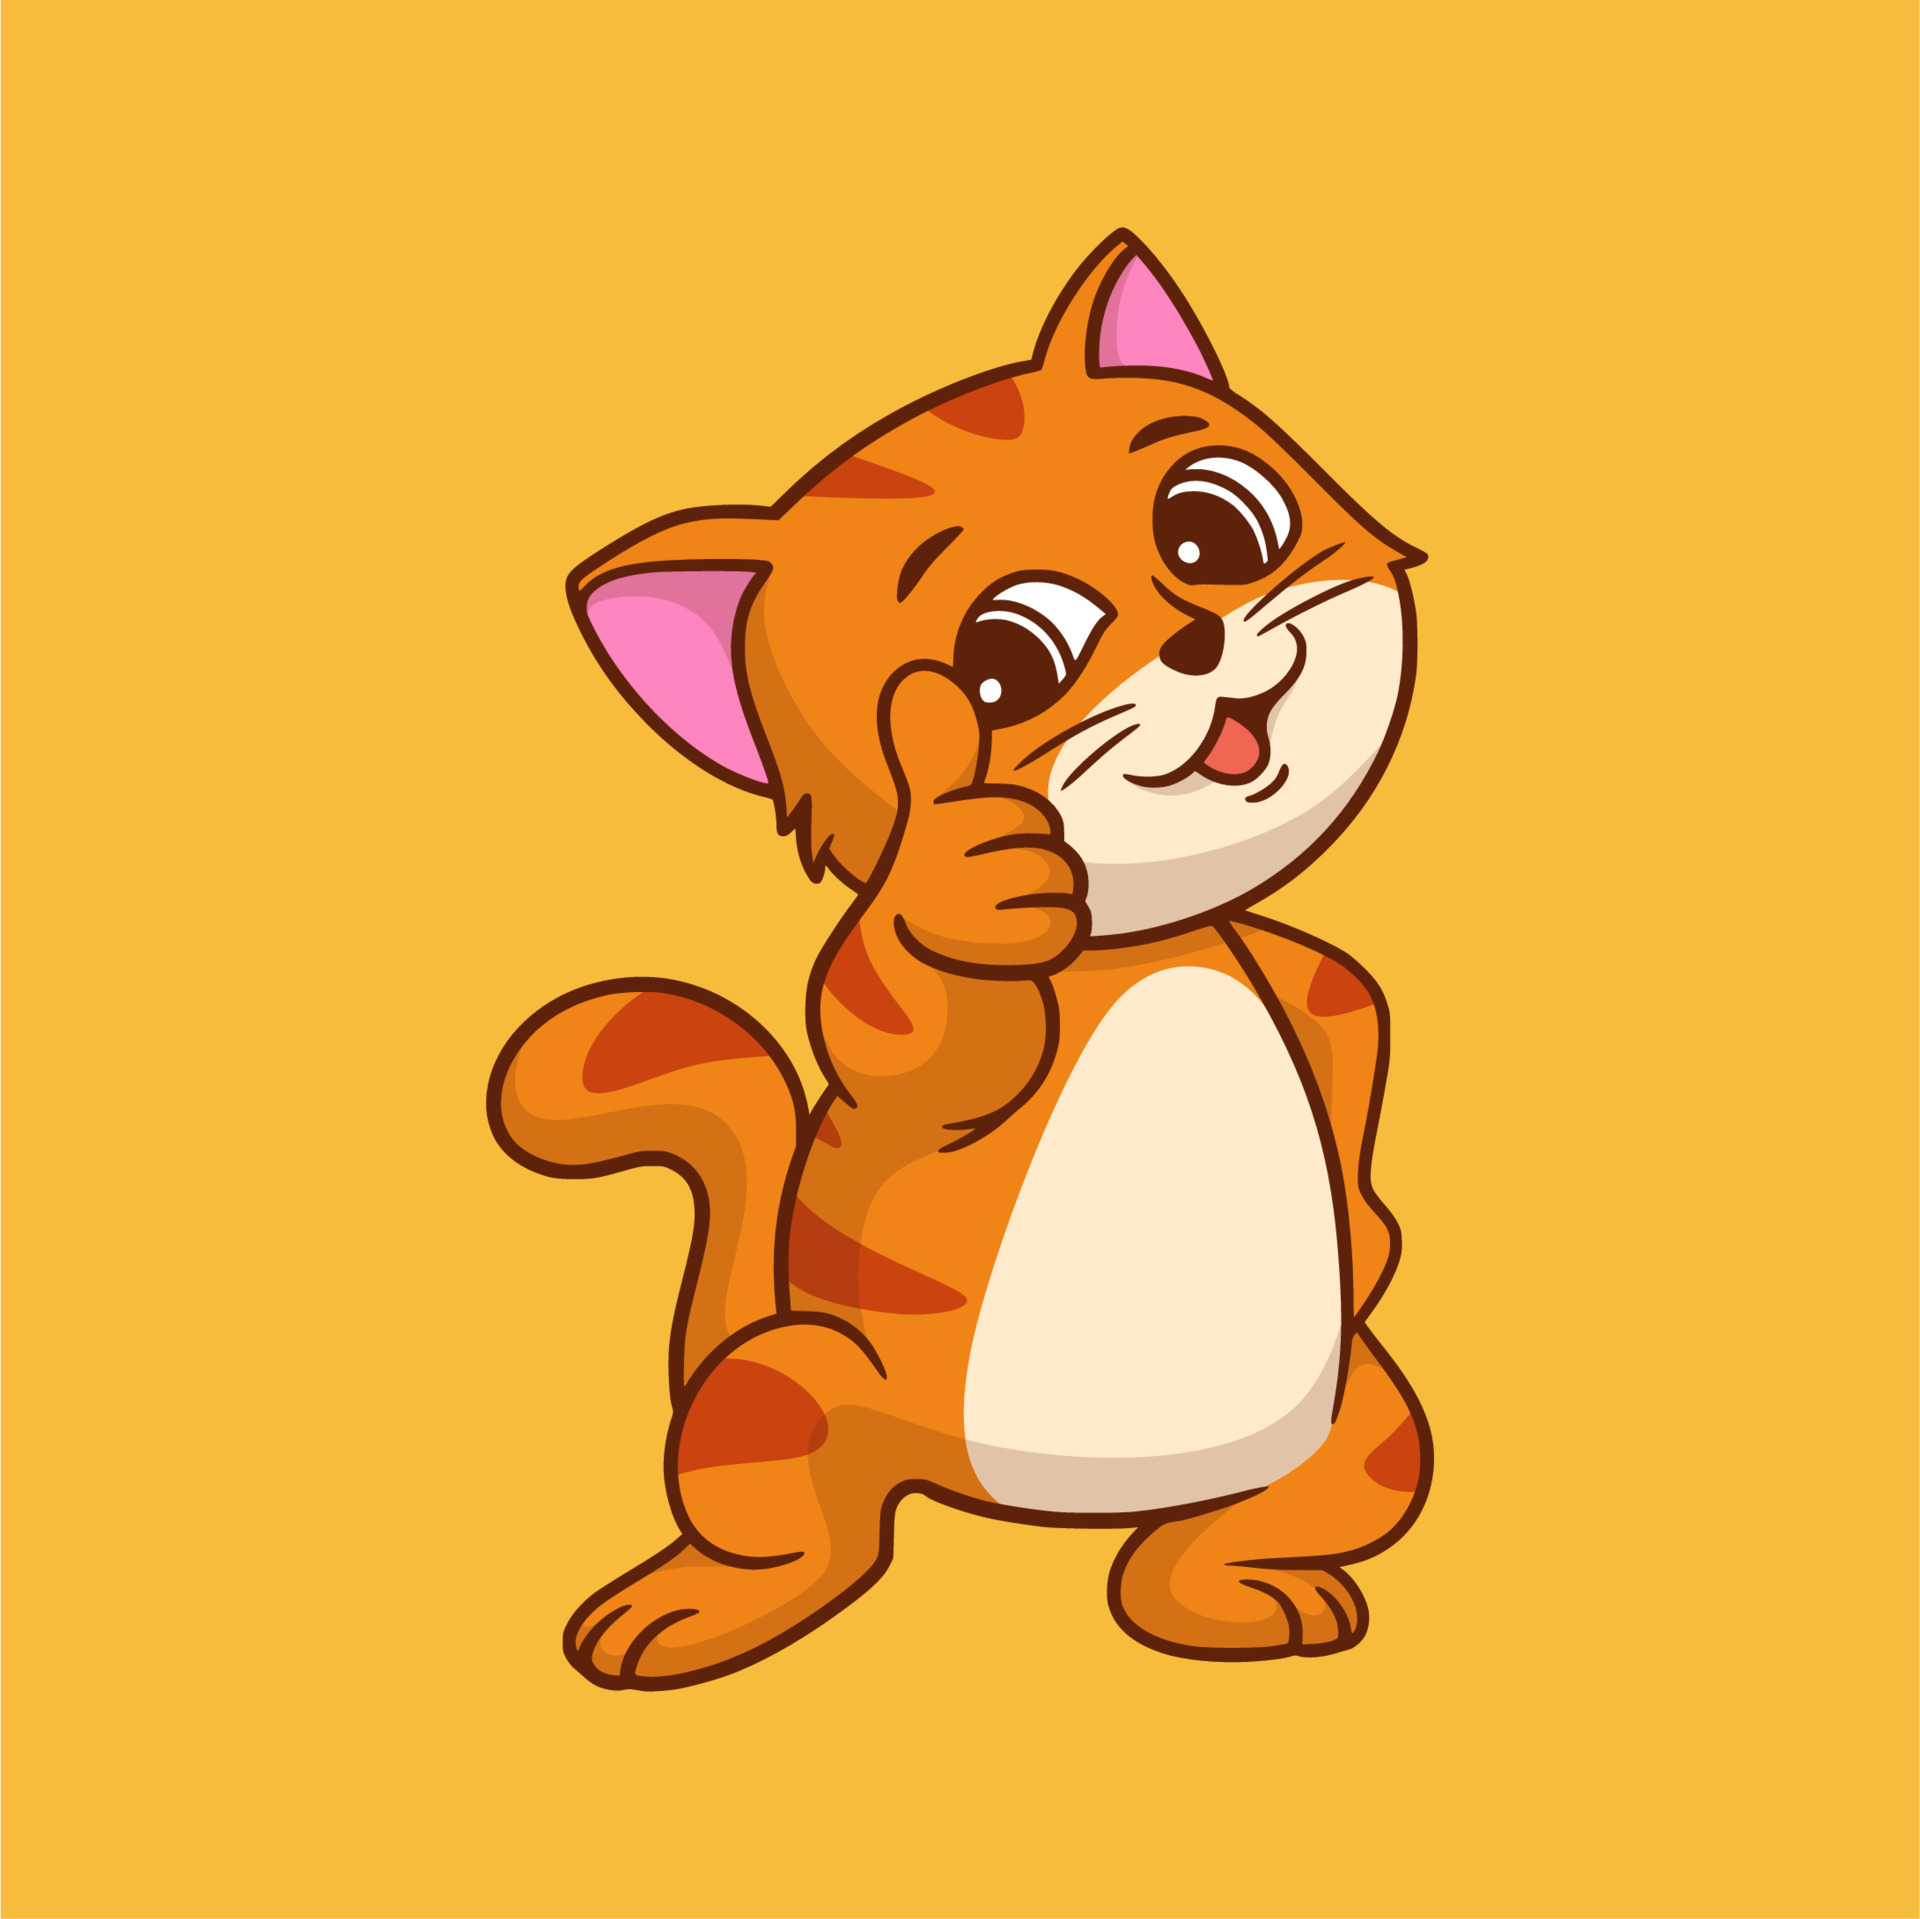 https://static.vecteezy.com/system/resources/previews/004/600/631/original/cartoon-animal-design-cat-thumbs-up-pose-cute-mascot-logo-vector.jpg